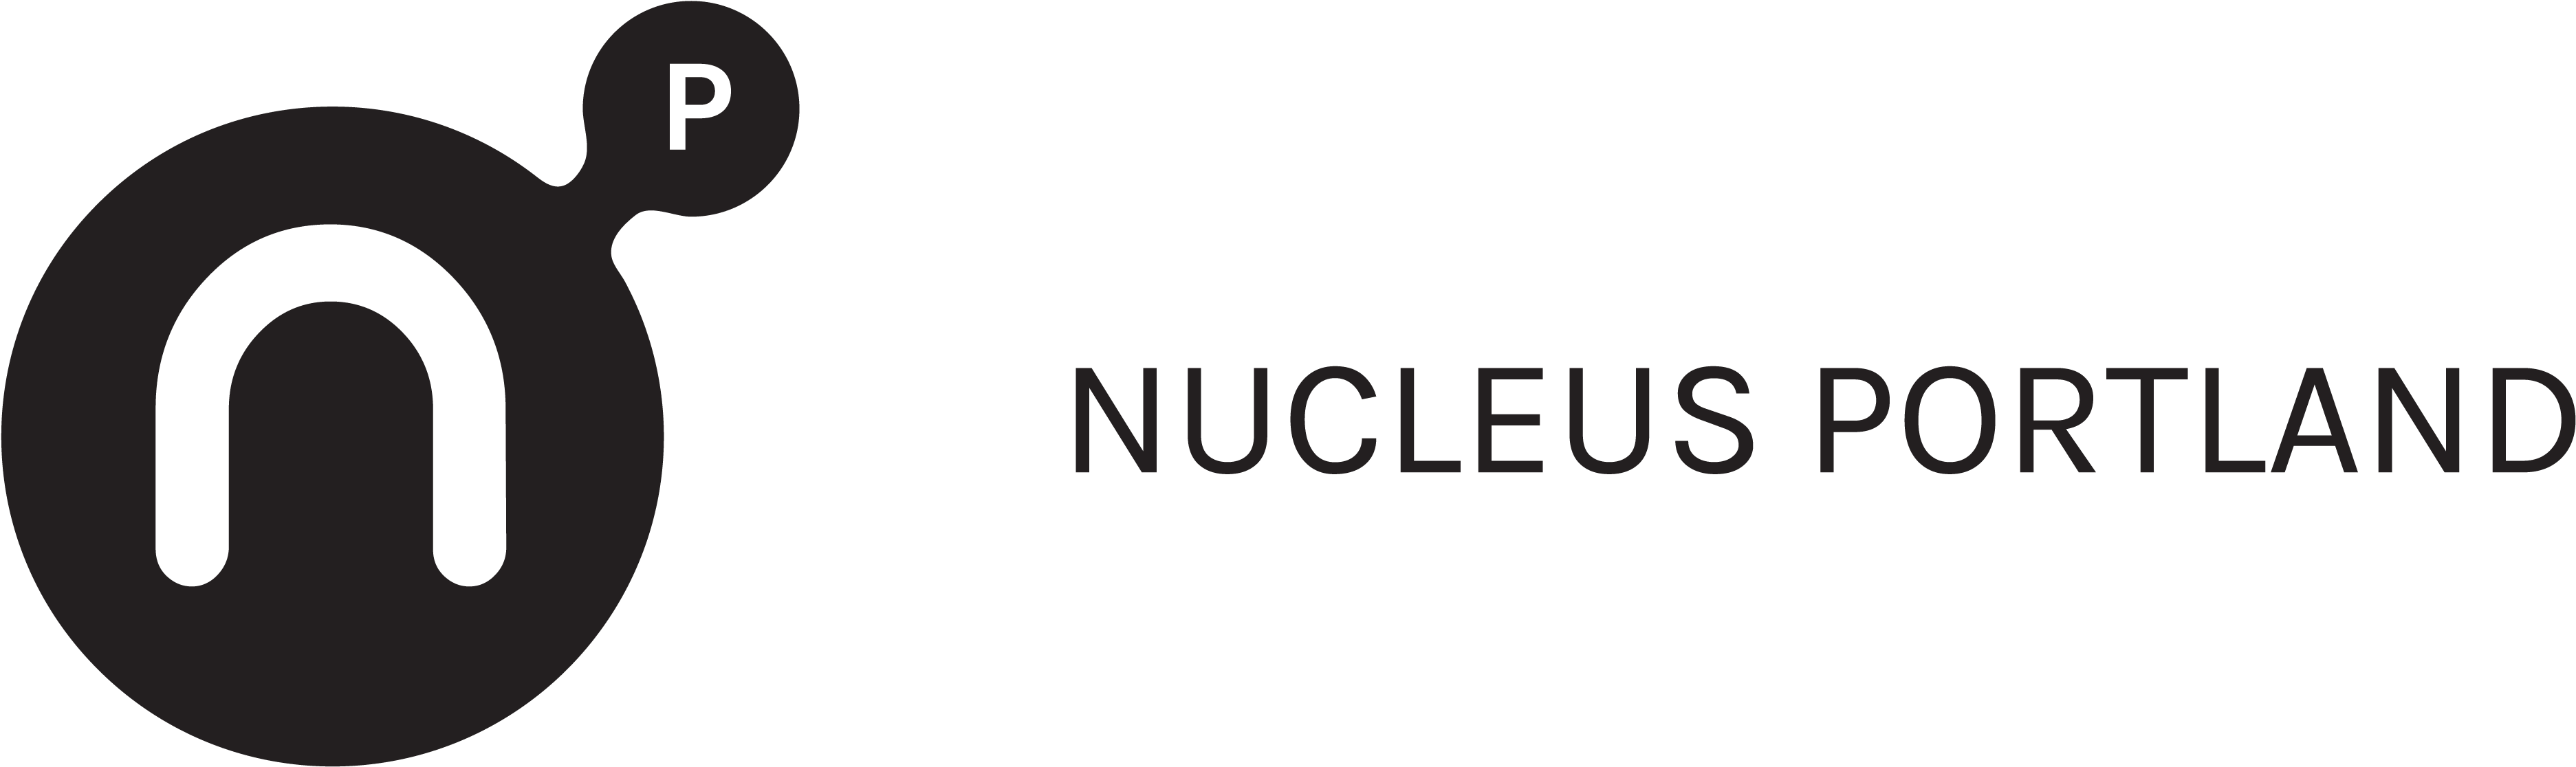 Nucleus Portland (4921x1975), Png Download